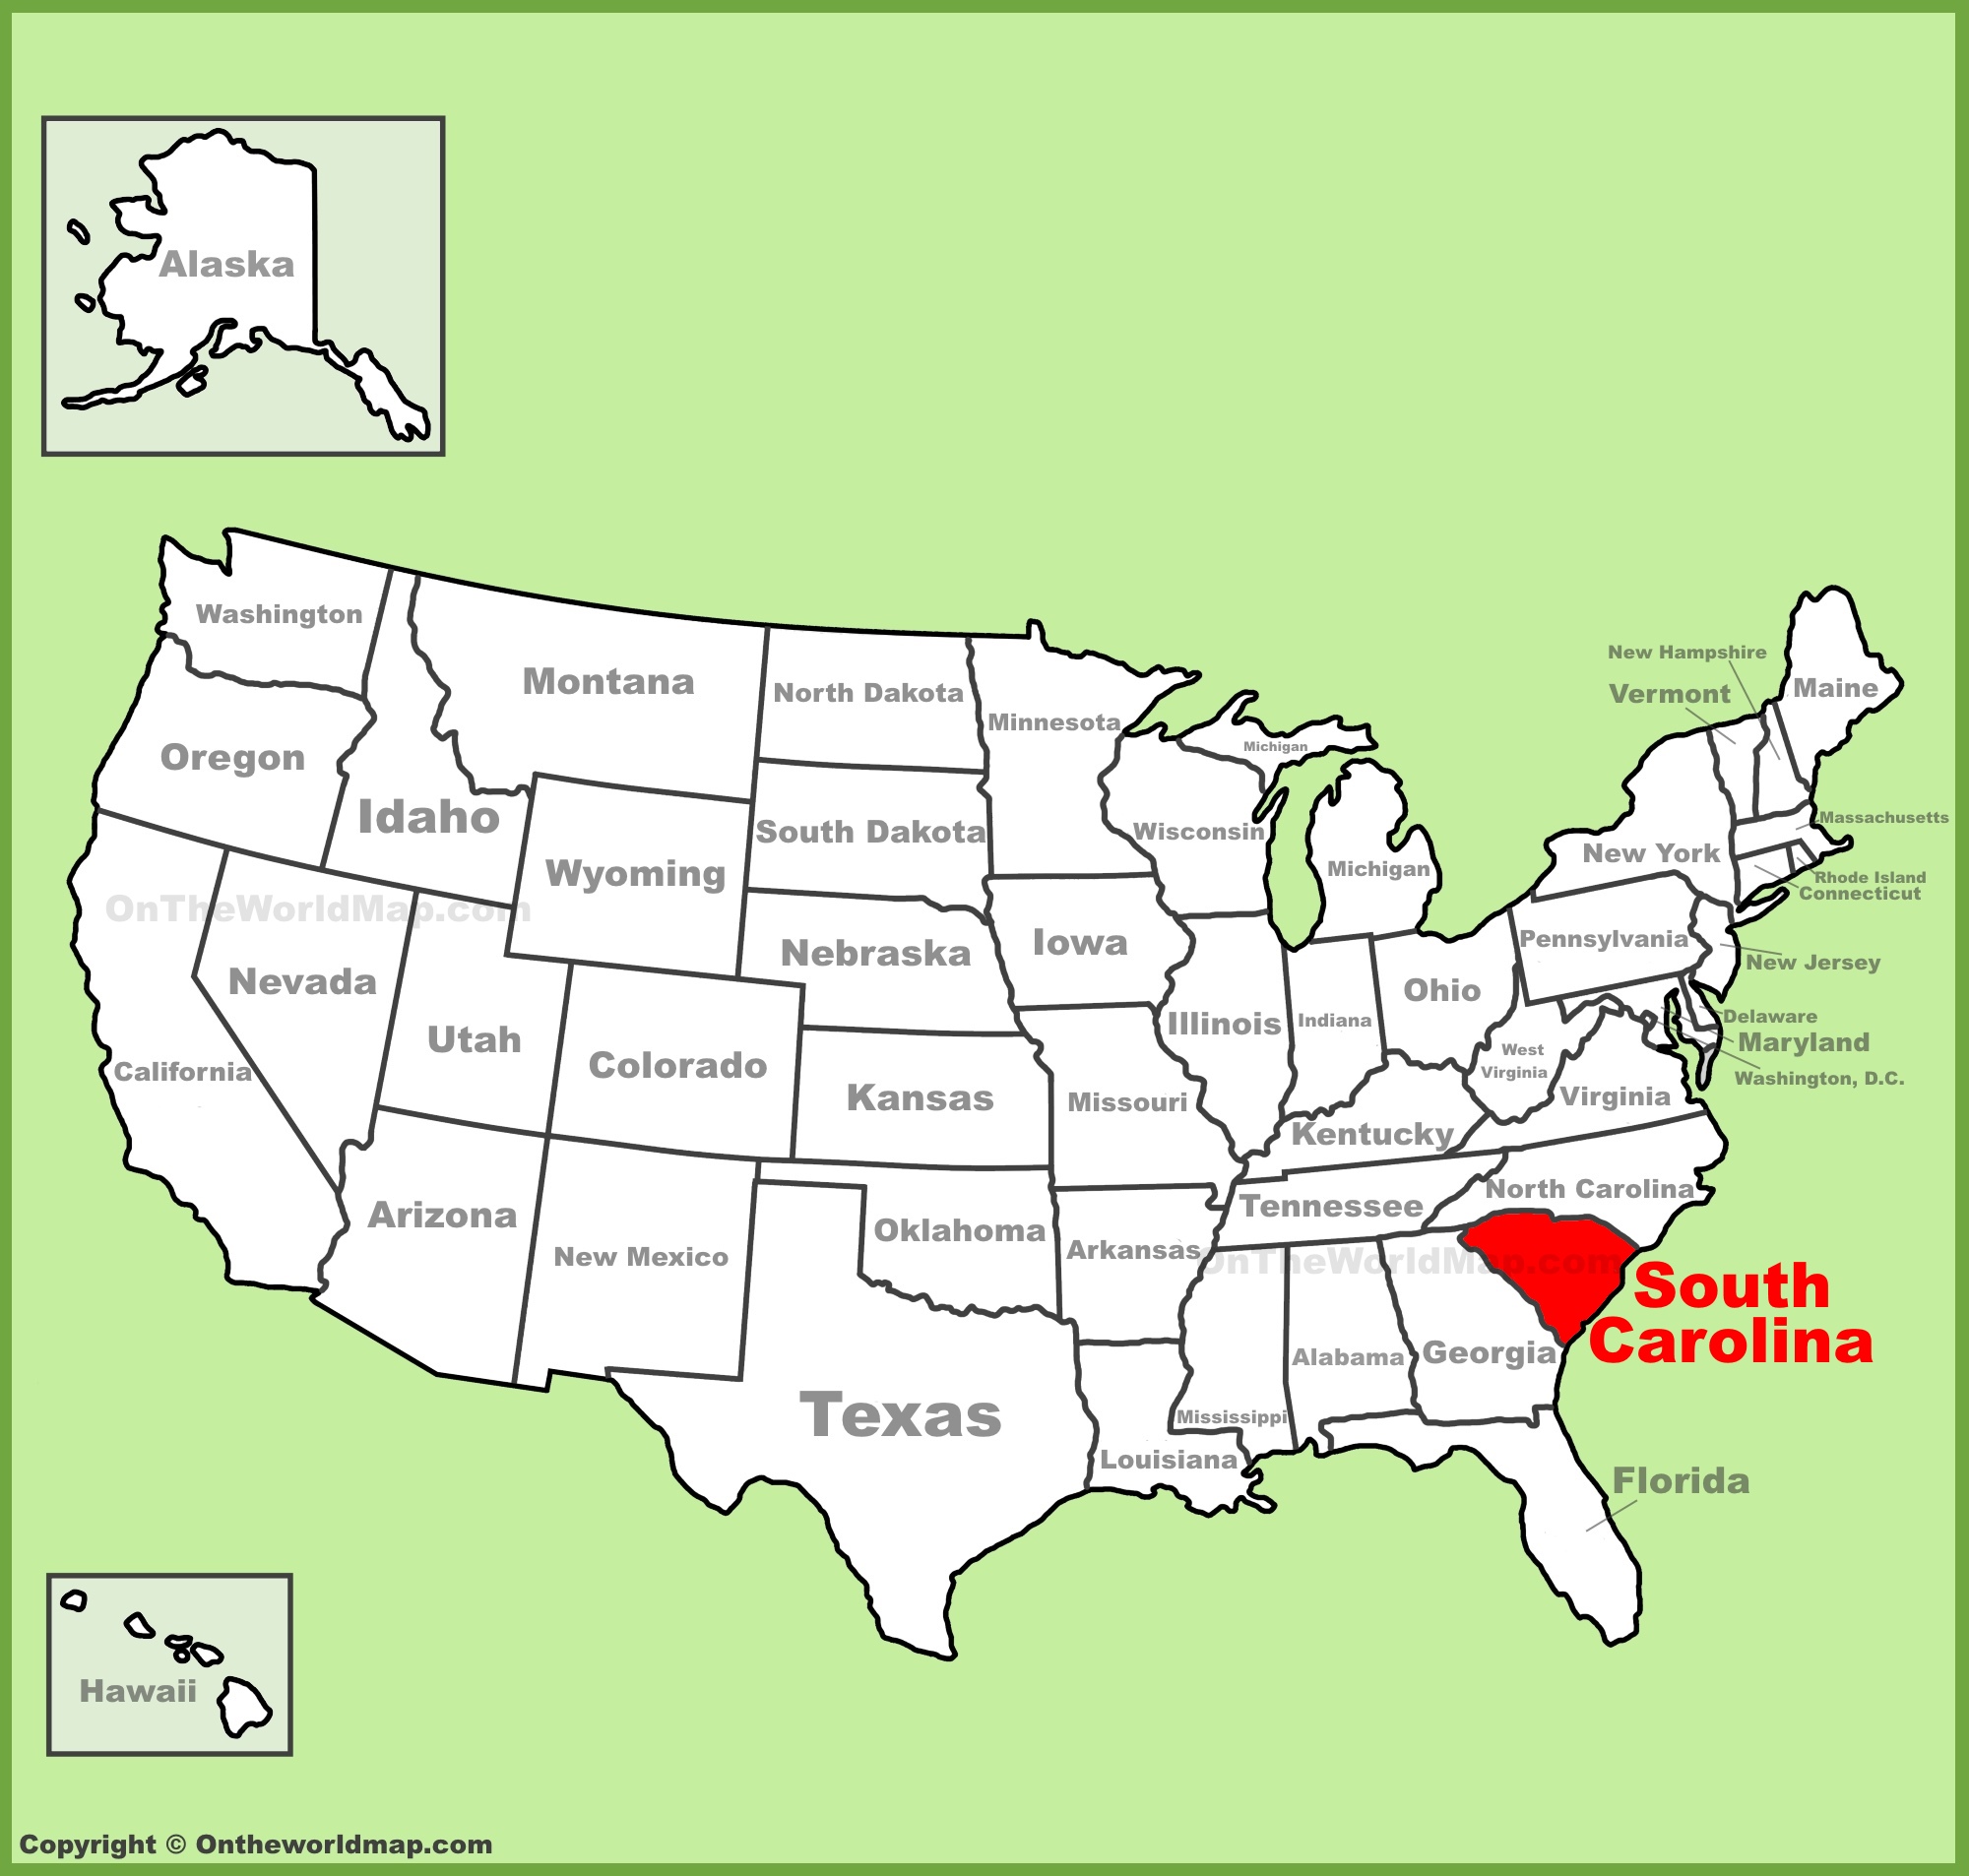 South Carolina location on the U.S. Map